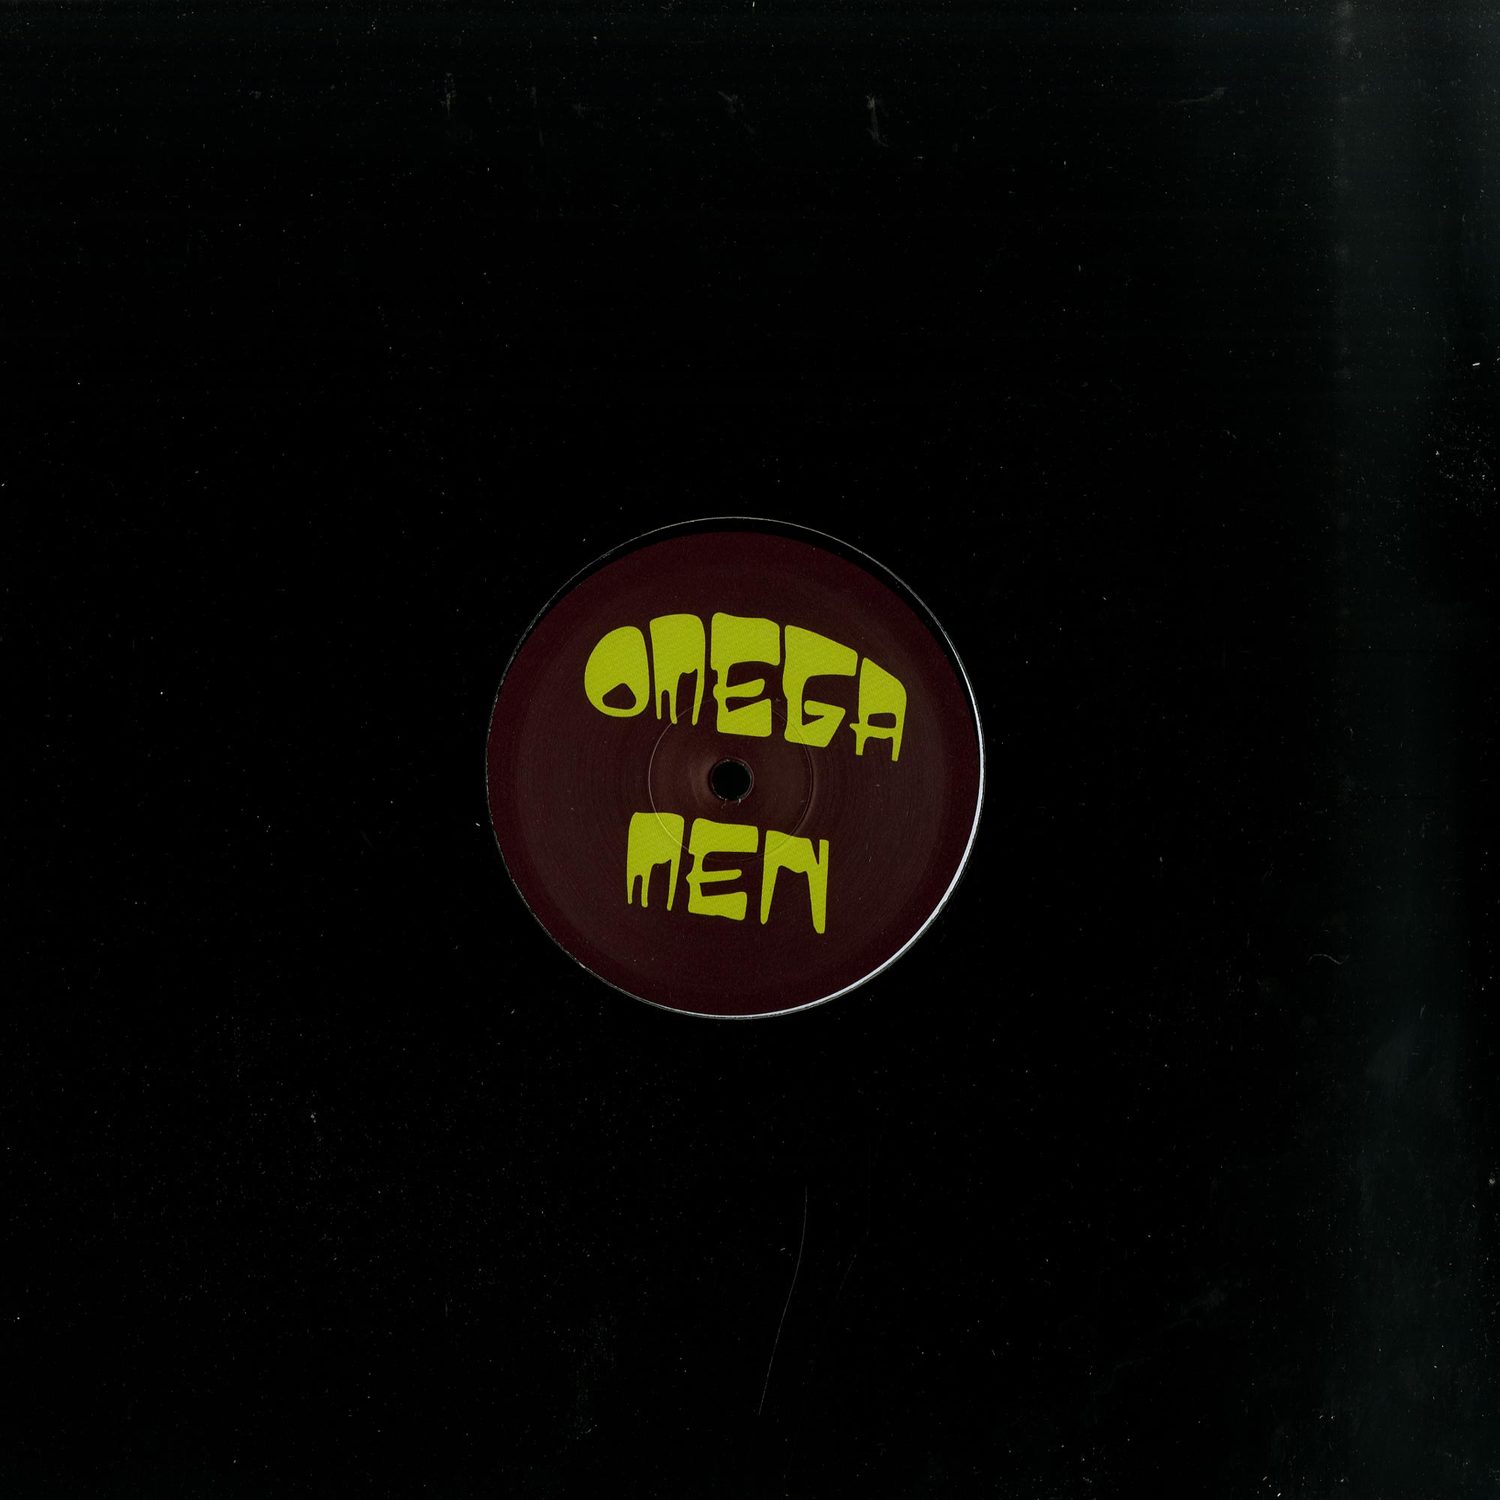 Omega Men - HACK FLAME WIN LOSE